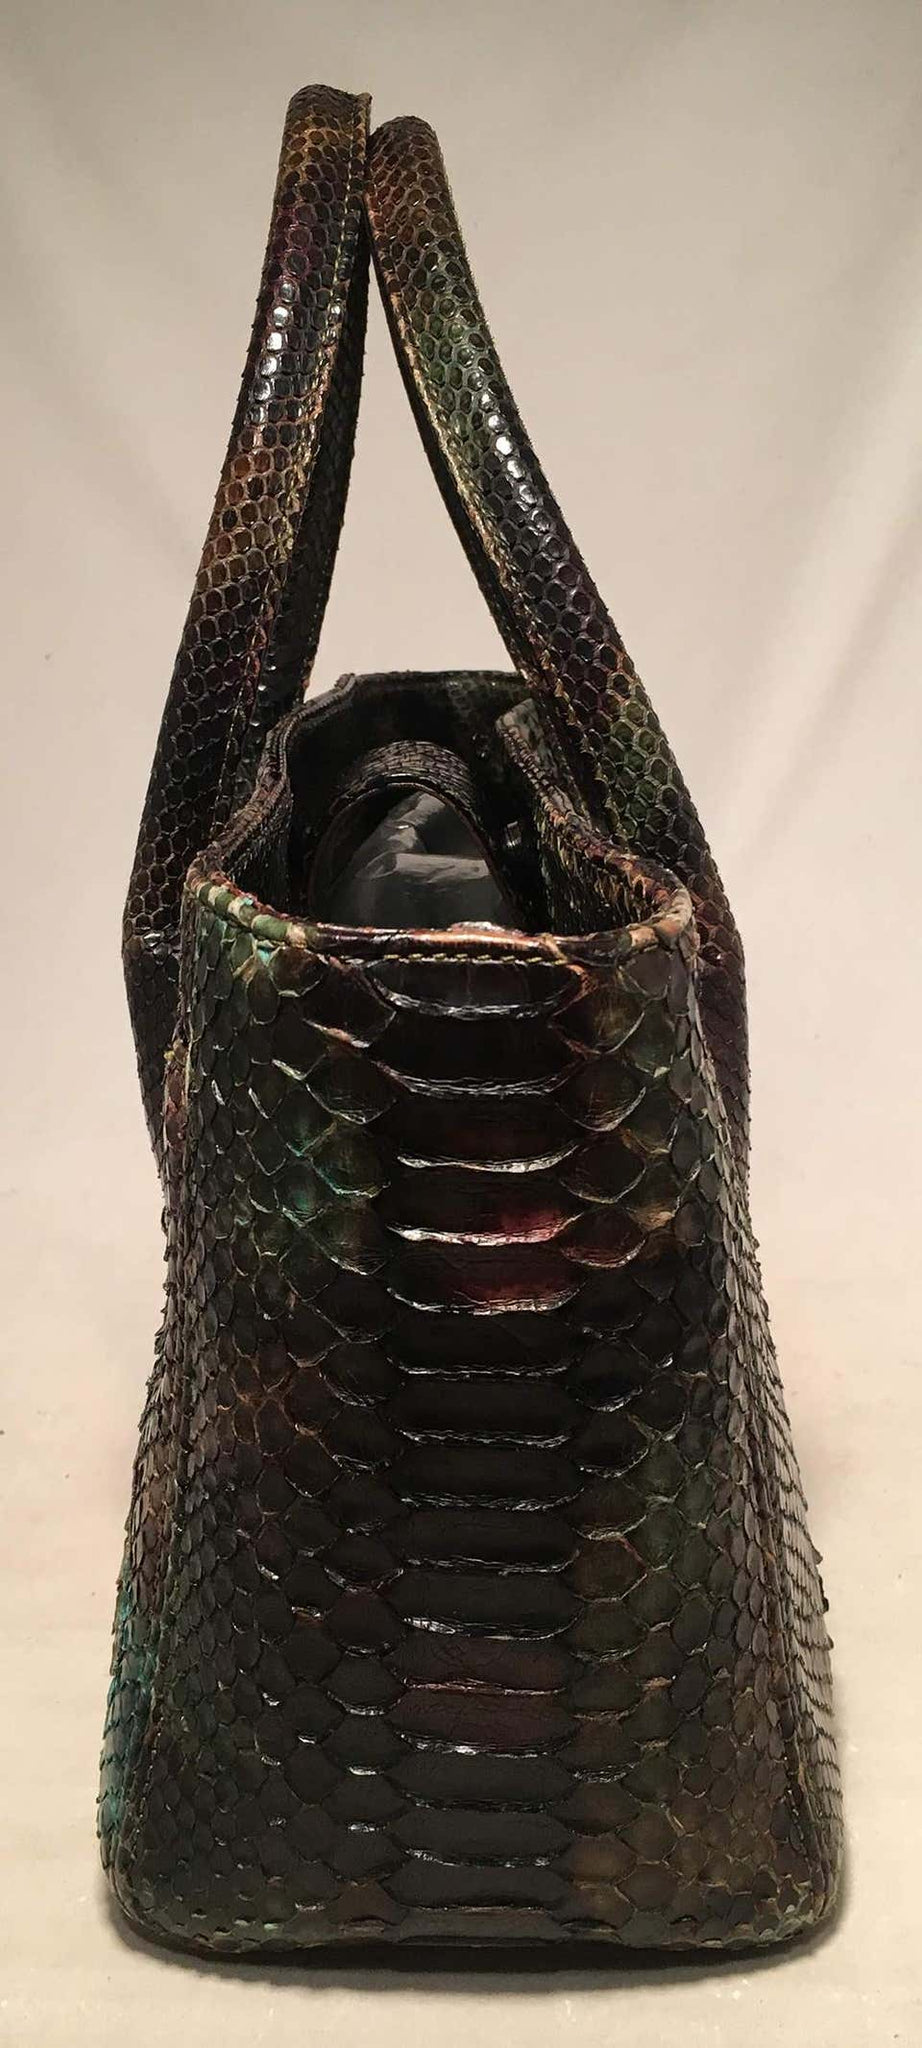 Chanel Green and Brown Python Snakeskin Cerf Tote Handbag